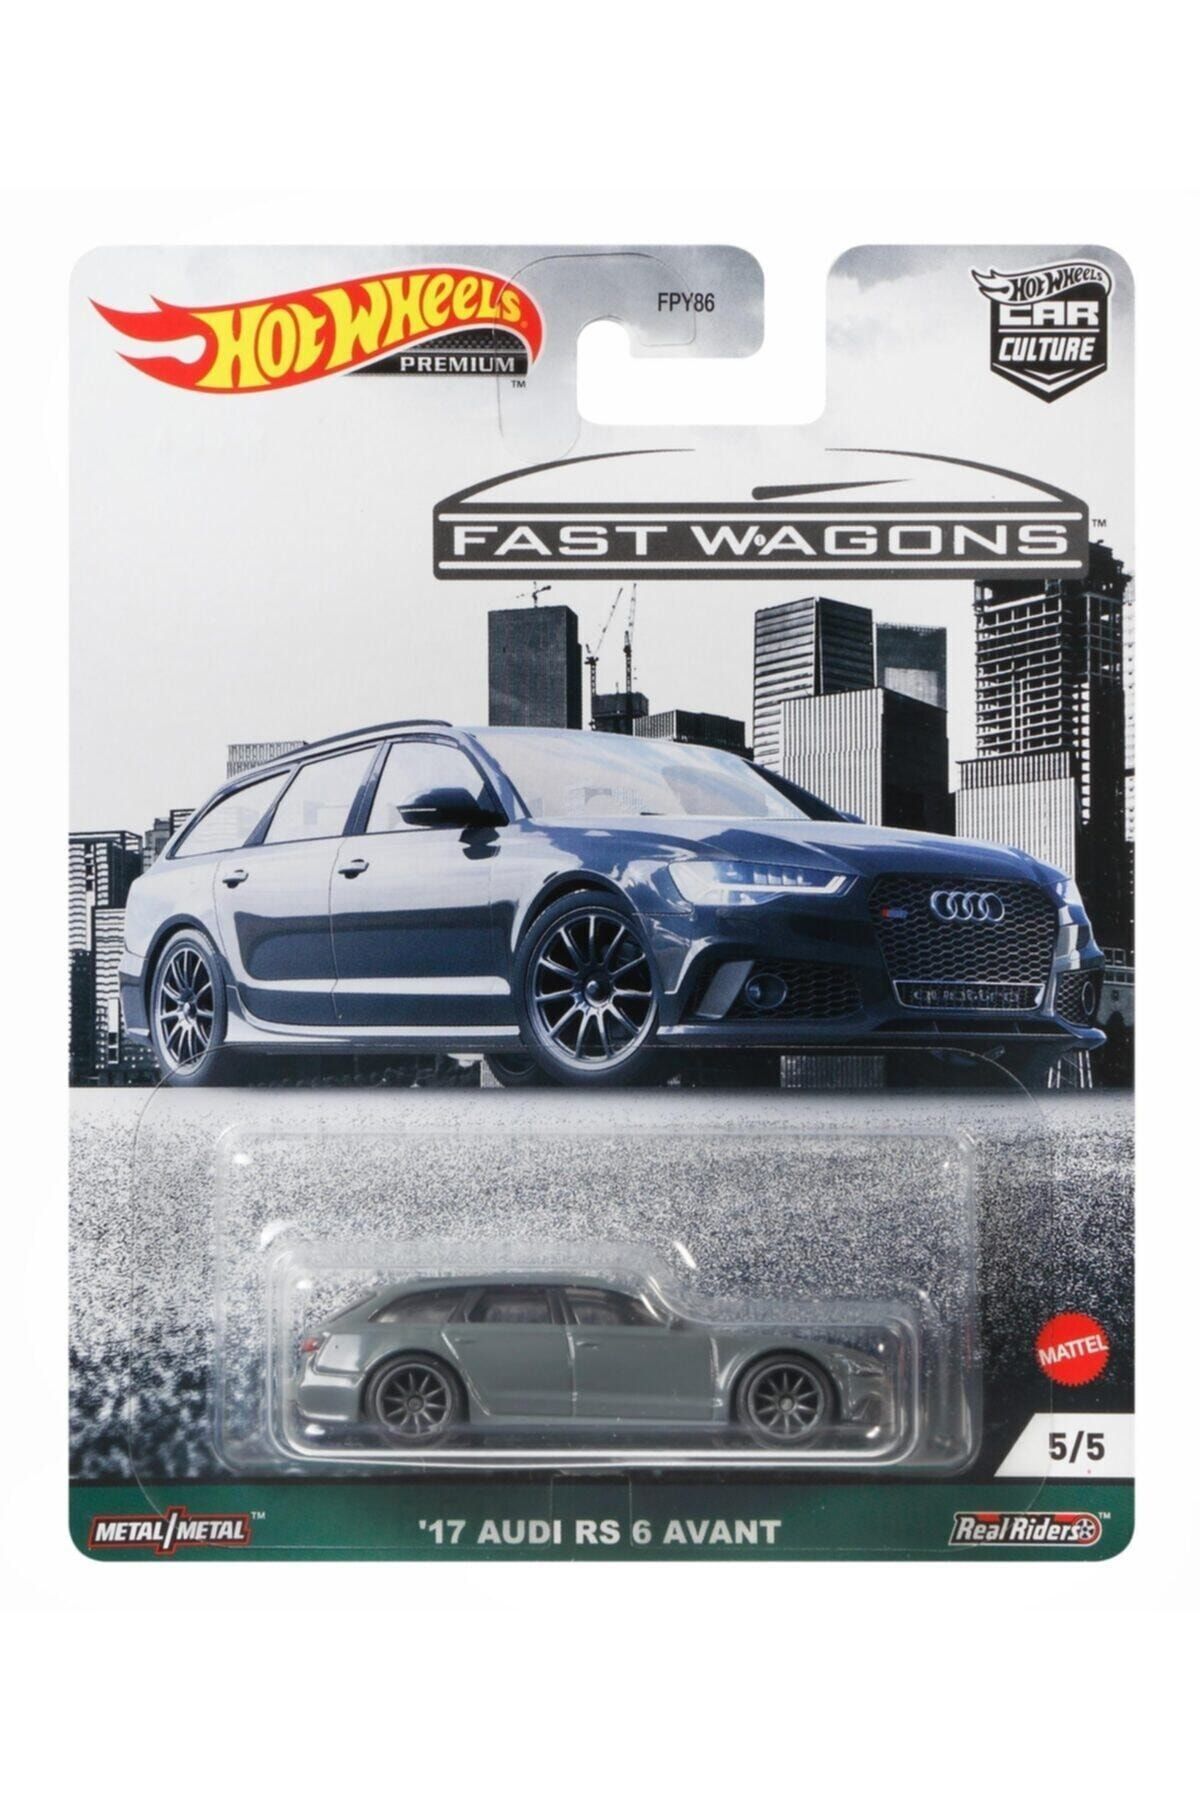 HOT WHEELS Premium - Audi Rs6 - 1:64 Ölçek - Fast Wagons